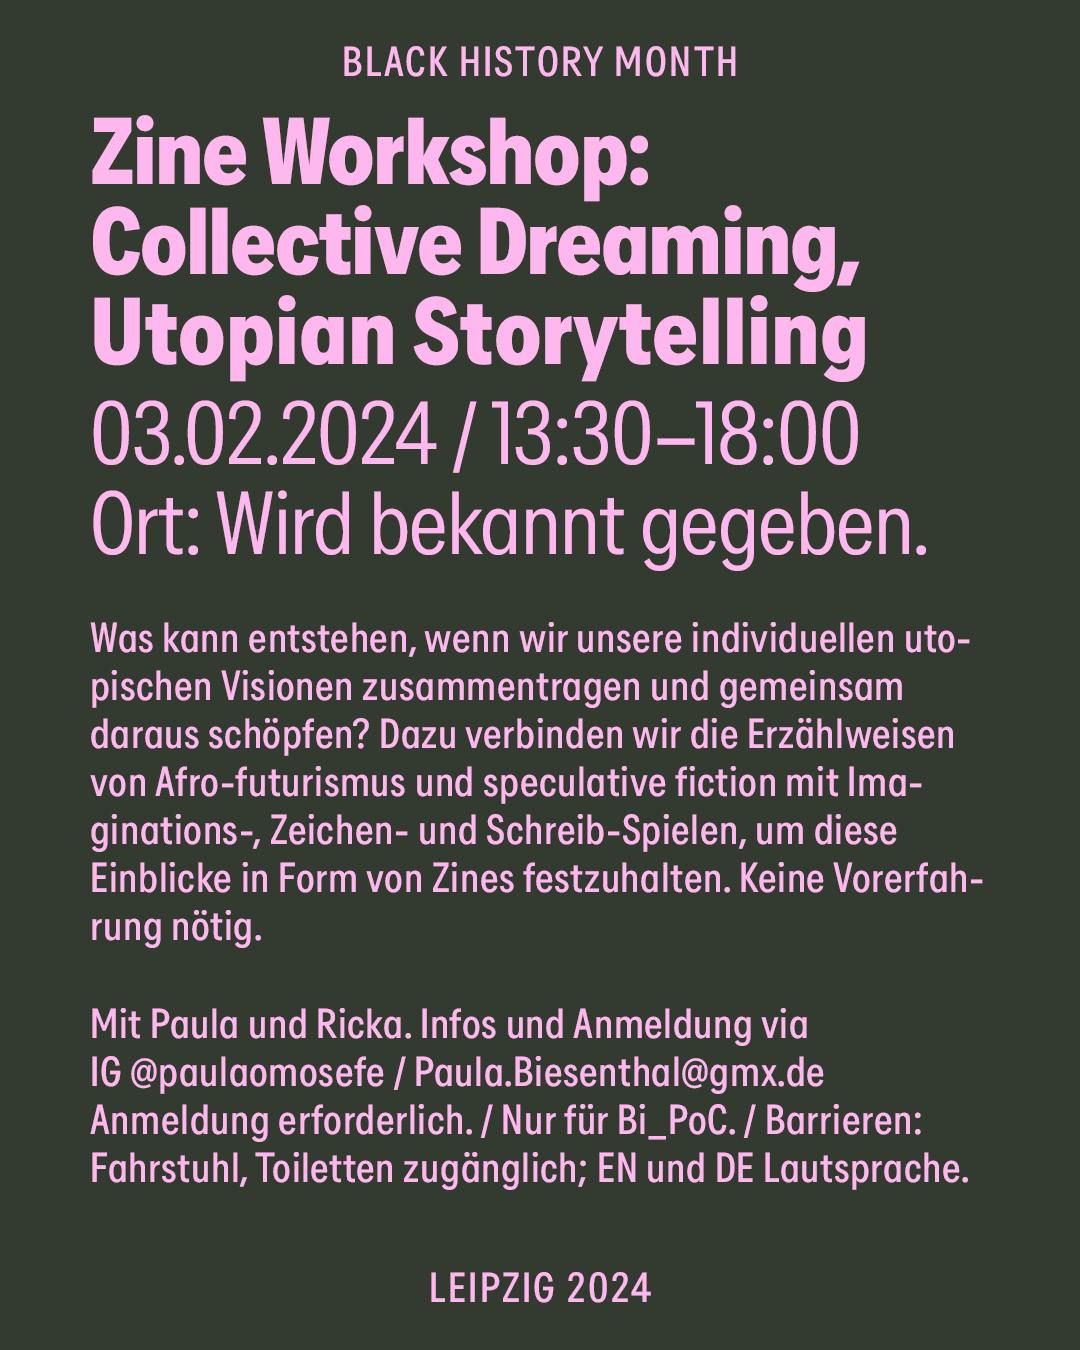 Zine Workshop: Collective Dreaming Utopian Storytelling